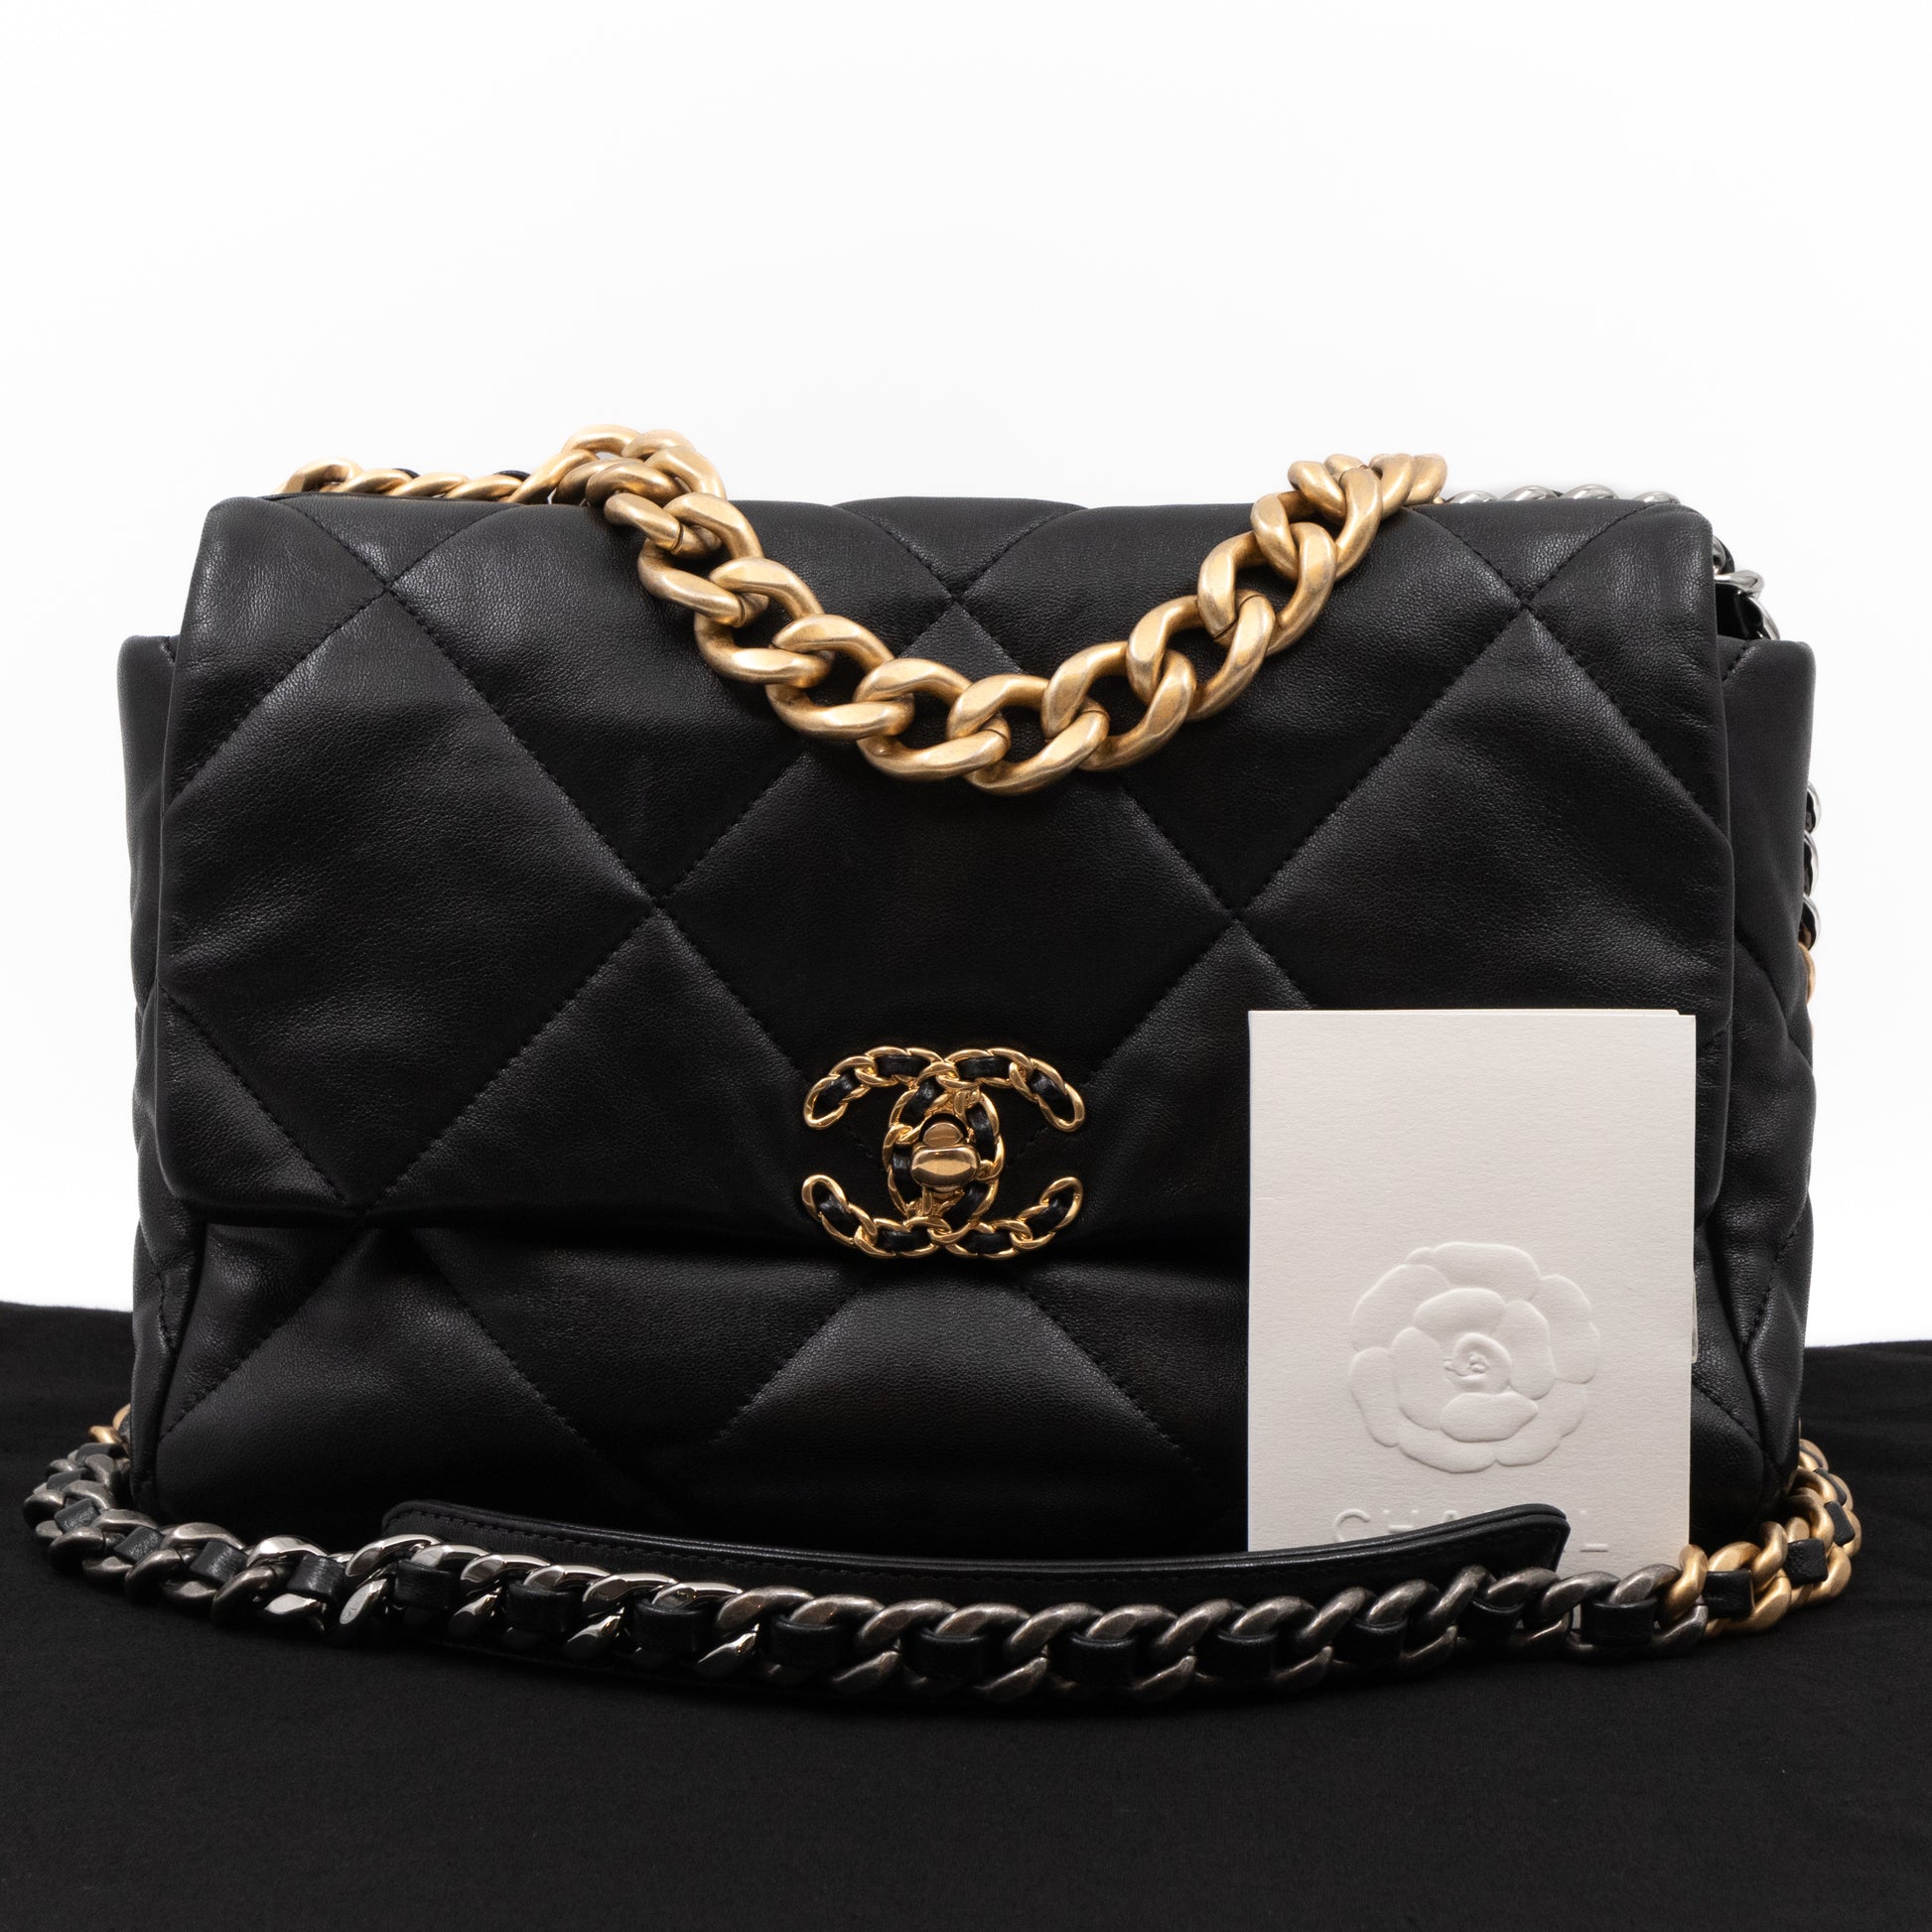 Chanel – Chanel 19 Large Handbag Black Shiny Lambskin – Queen Station